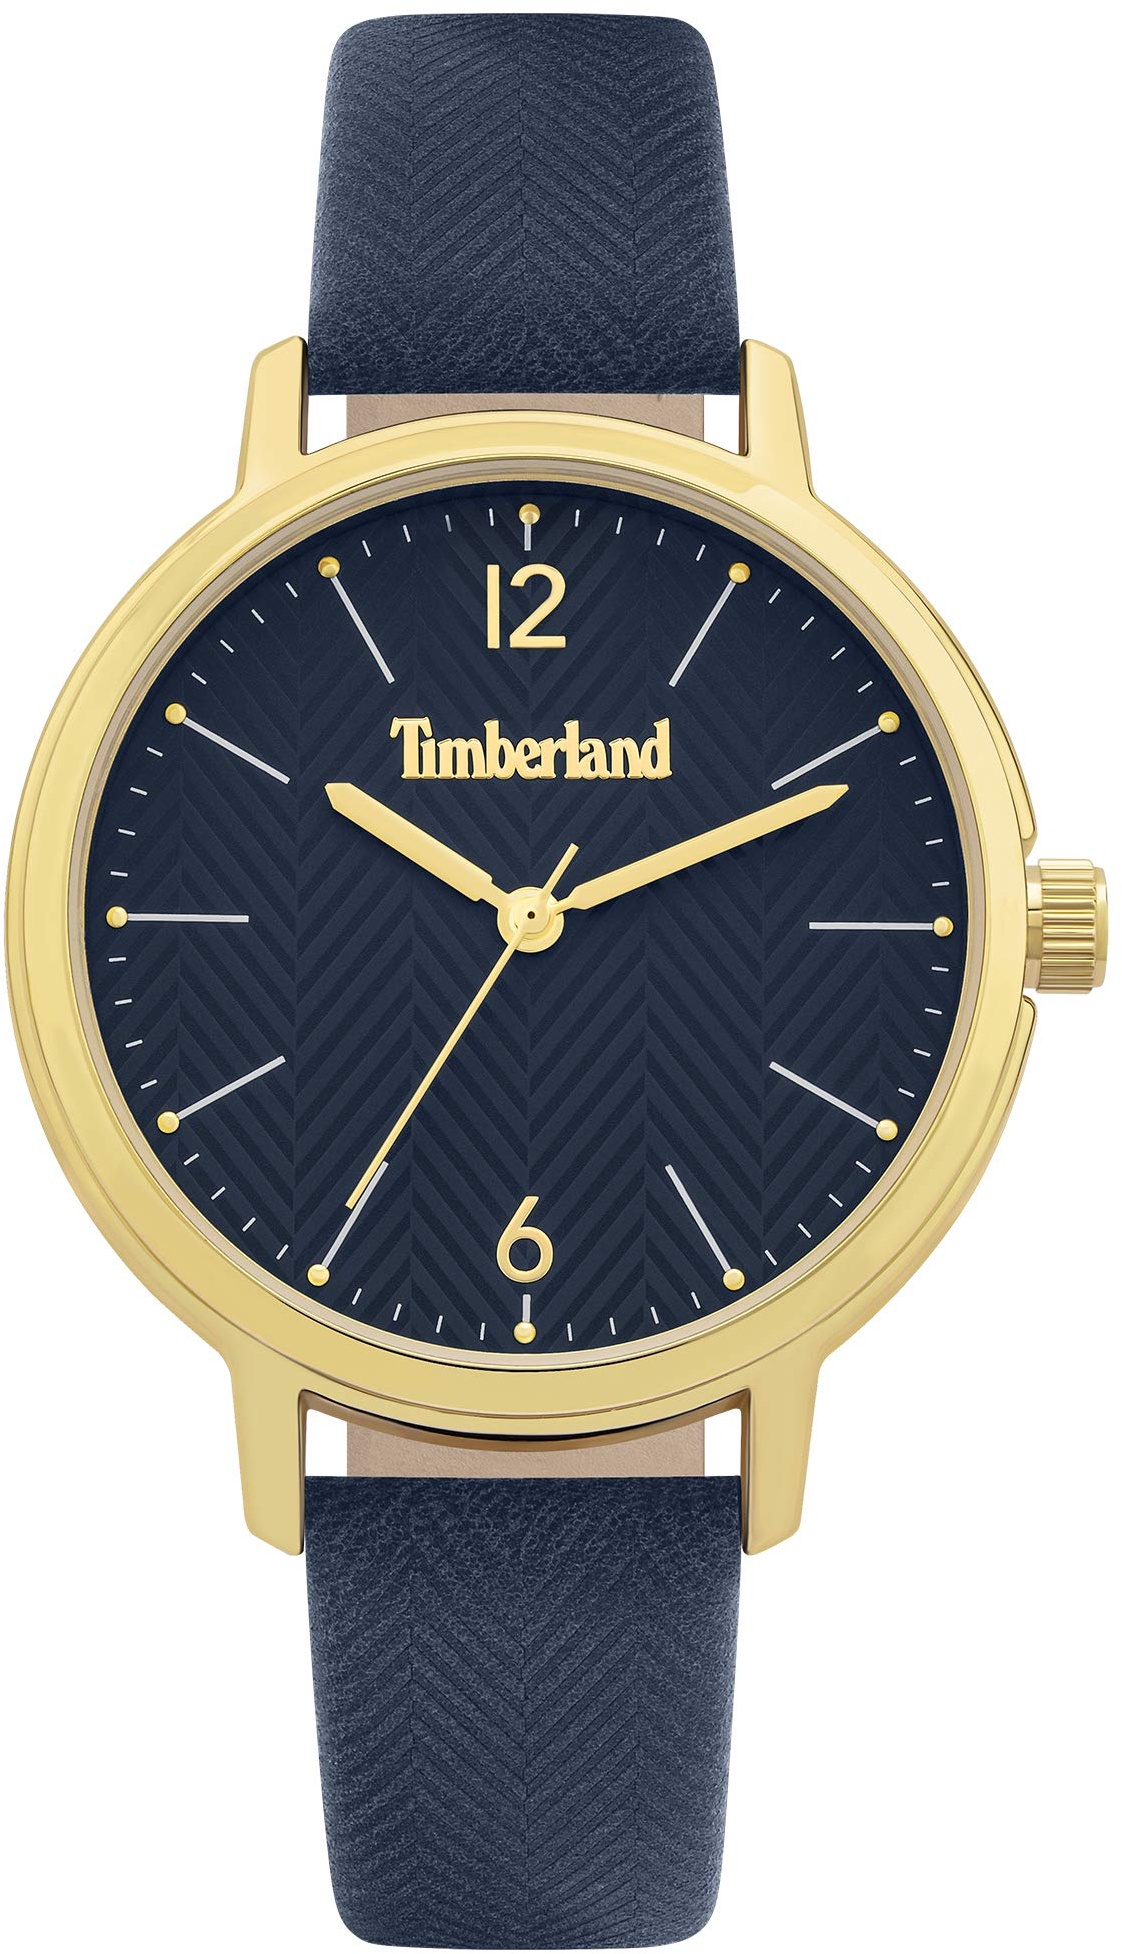 Timberland Damen Analog Quarz Uhr mit Leder-Kalbsleder Armband TBL15960MYG.03